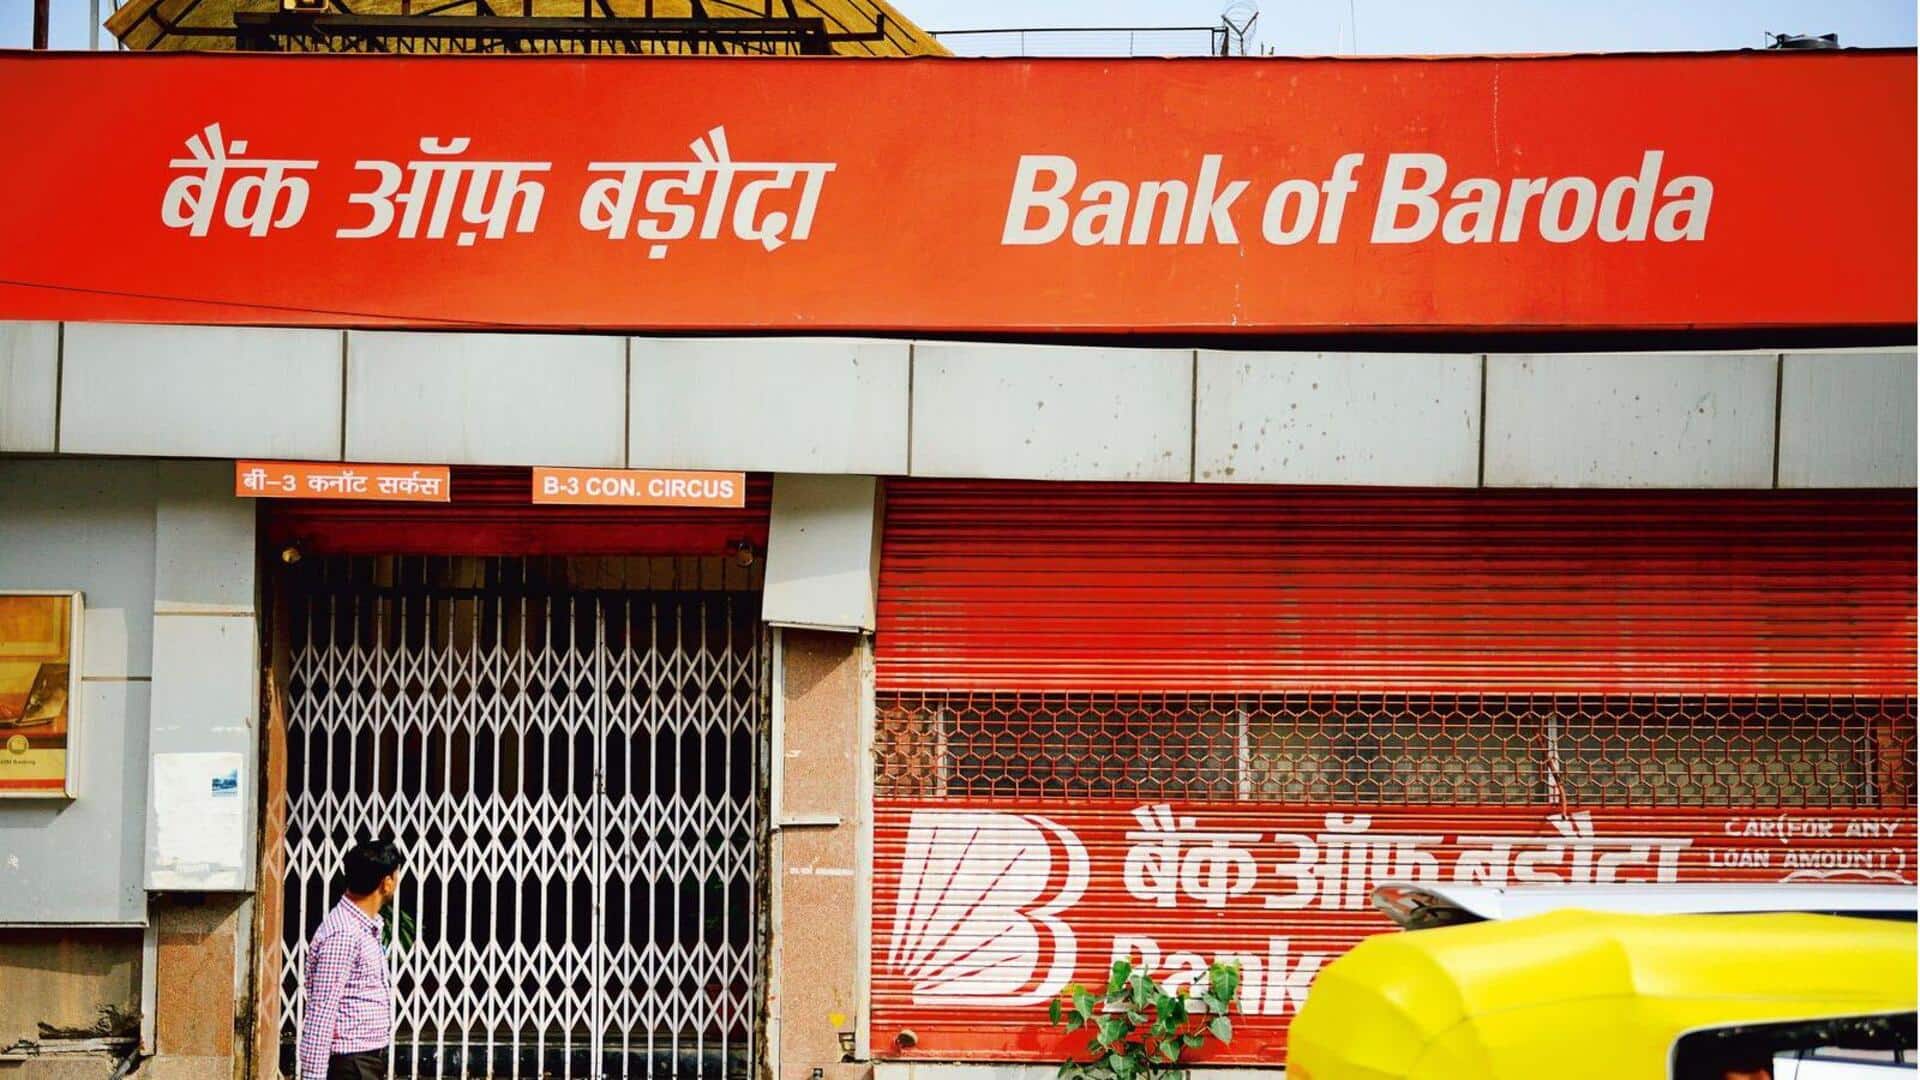 Bank of Baroda, NABARD, and IREDA raise crores through bonds